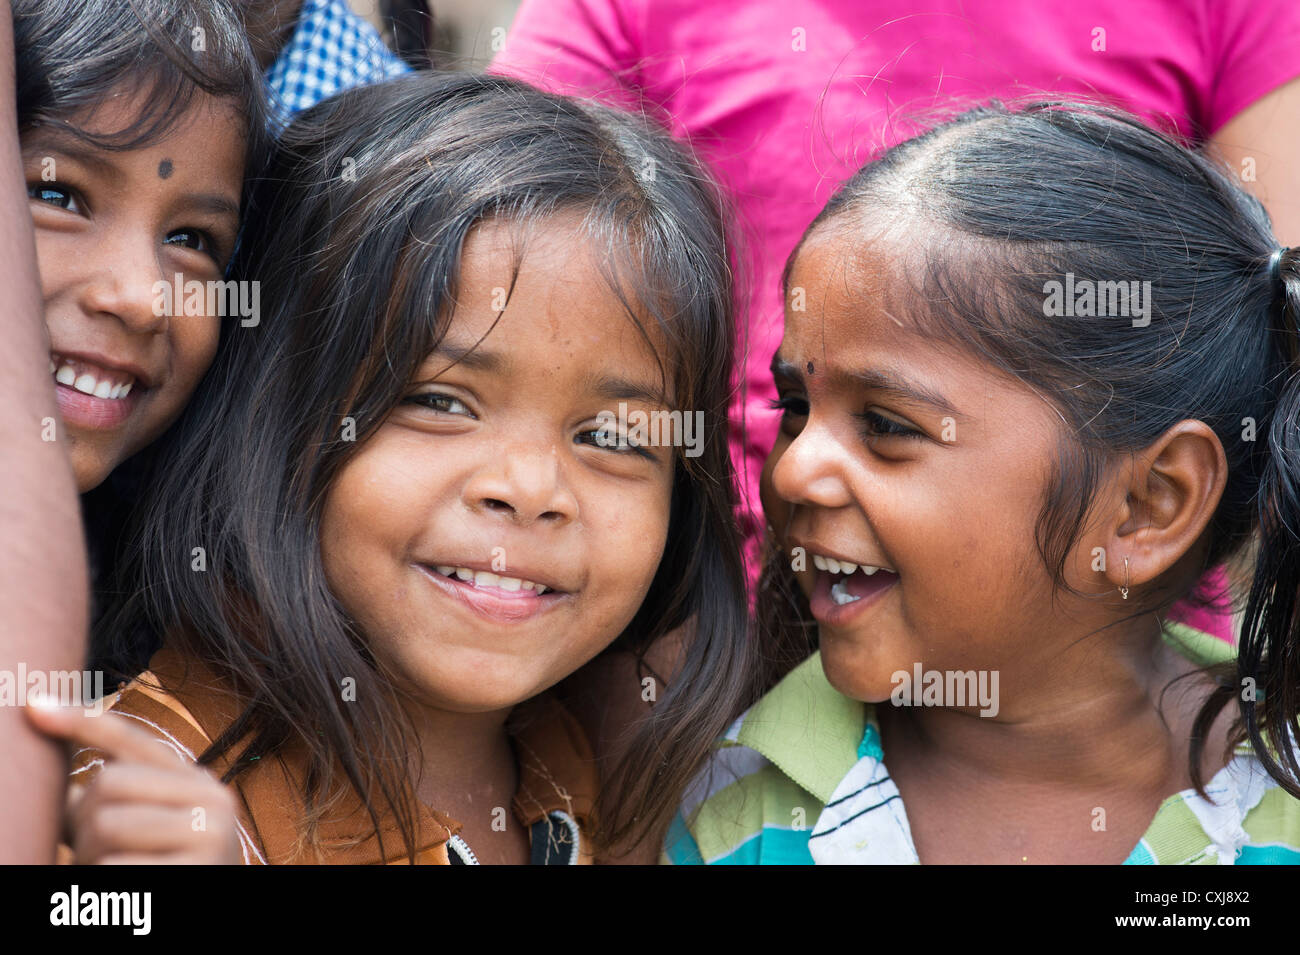 Smiling happy young rural Indian village girls. Andhra Pradesh, India Stock Photo